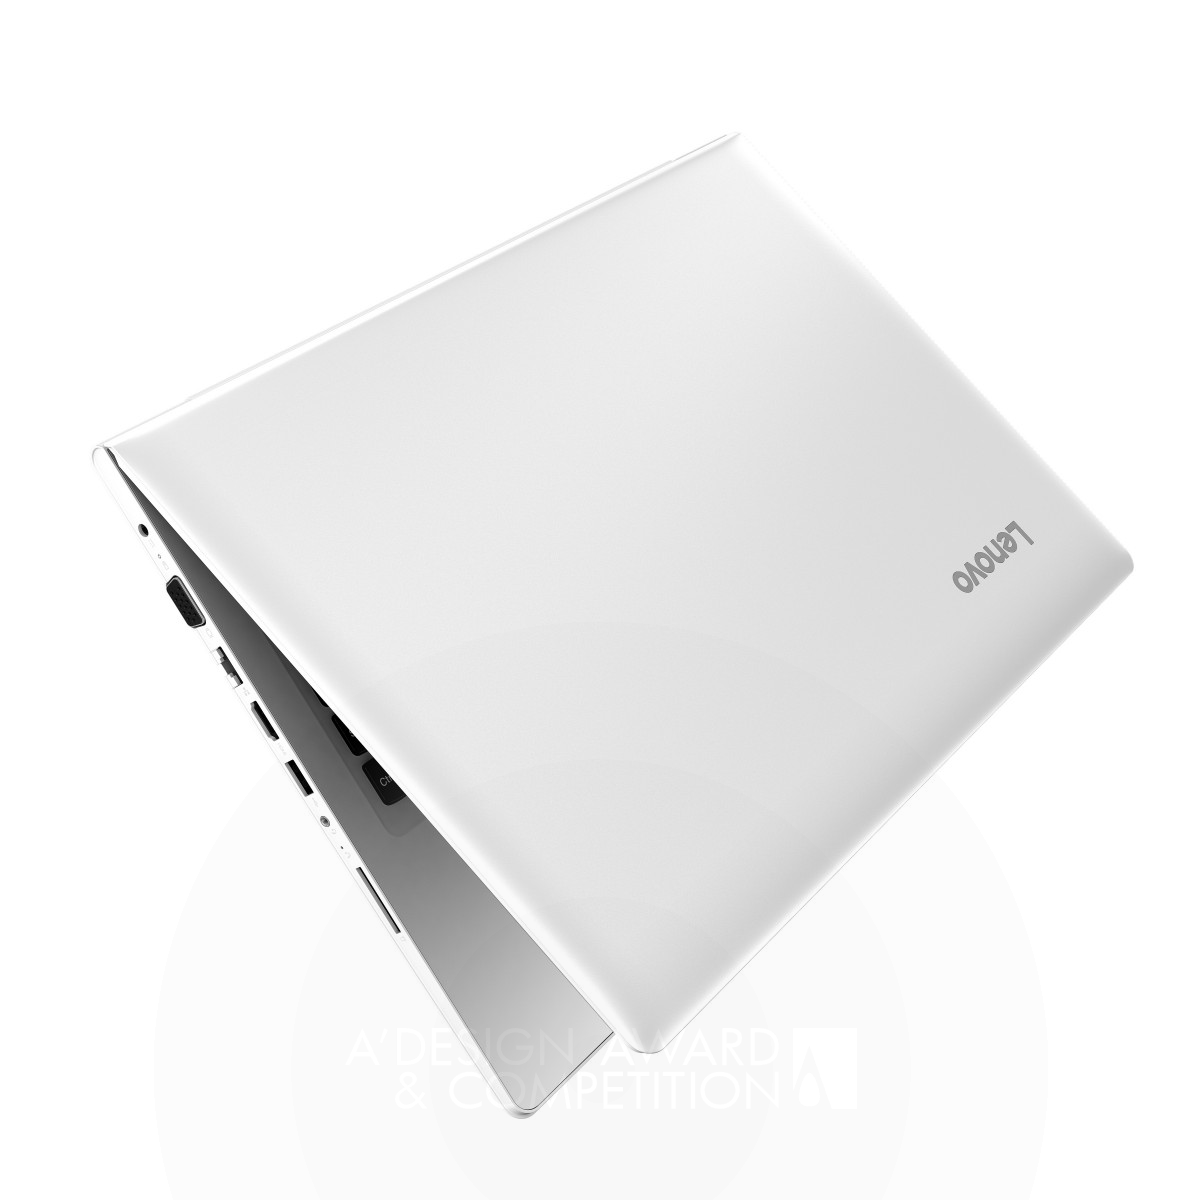 ideapad 310 Laptop by Lenovo (Beijing) Ltd. Golden Digital and Electronic Device Design Award Winner 2016 